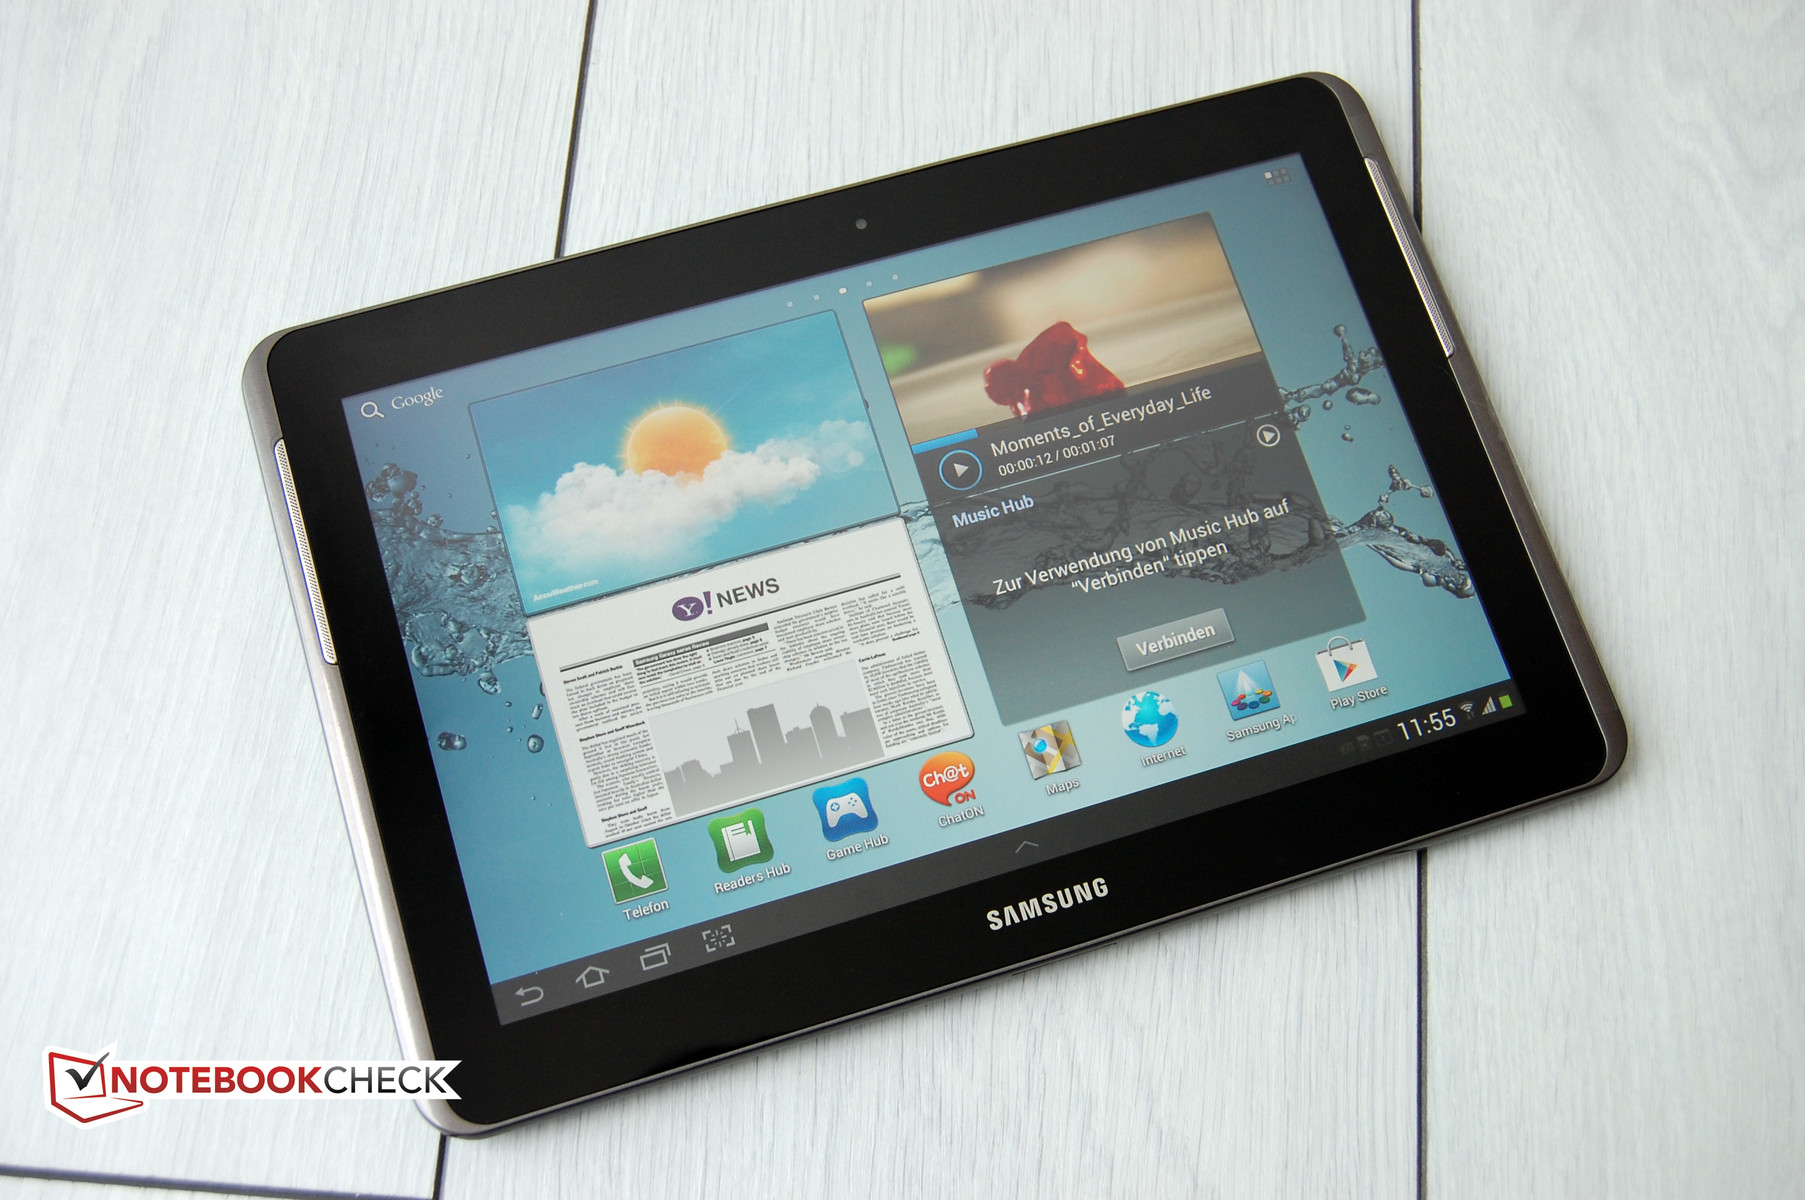 Lot verkoopplan Vorming Review Samsung 10.1" Galaxy Tab 2 Tablet/MID - NotebookCheck.net Reviews